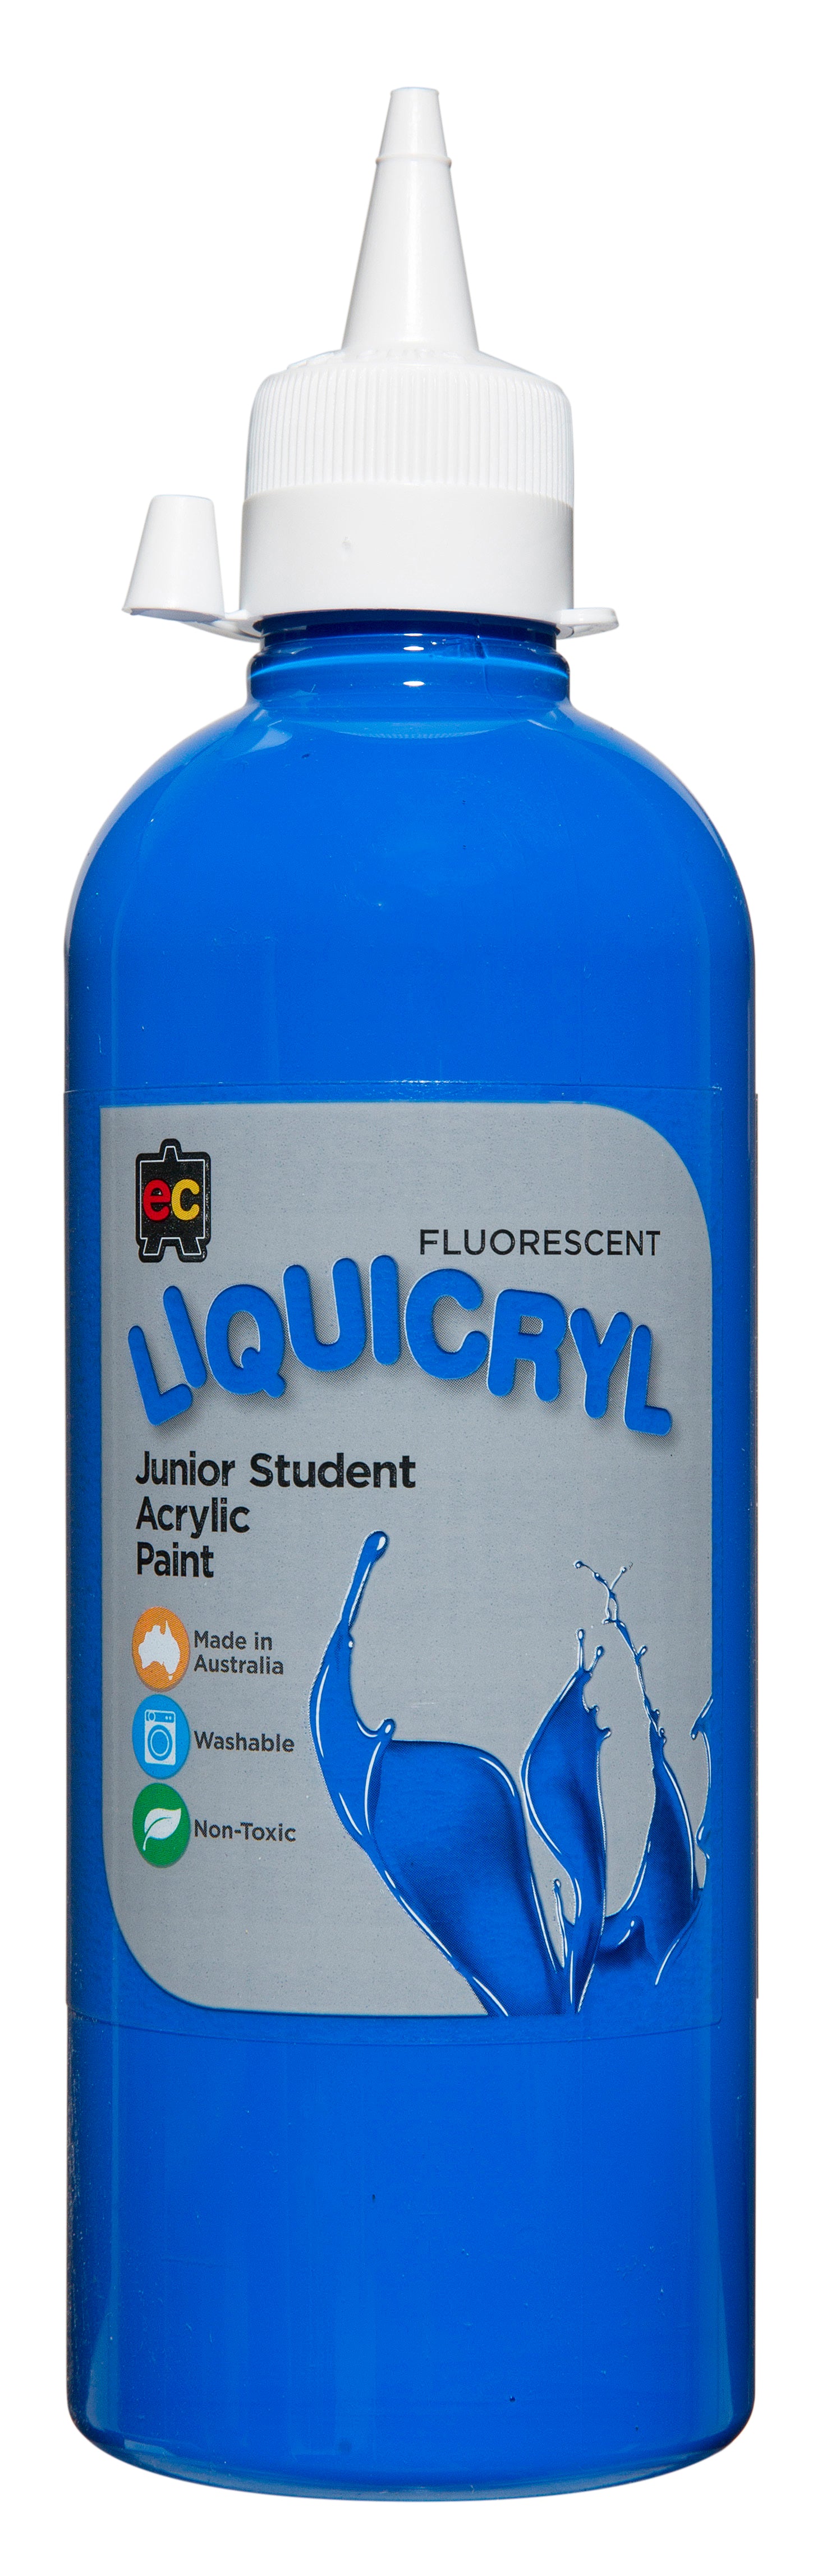 EC Liquicryl Junior Student Acrylic Paint - Fluro  - 500ml - Blue